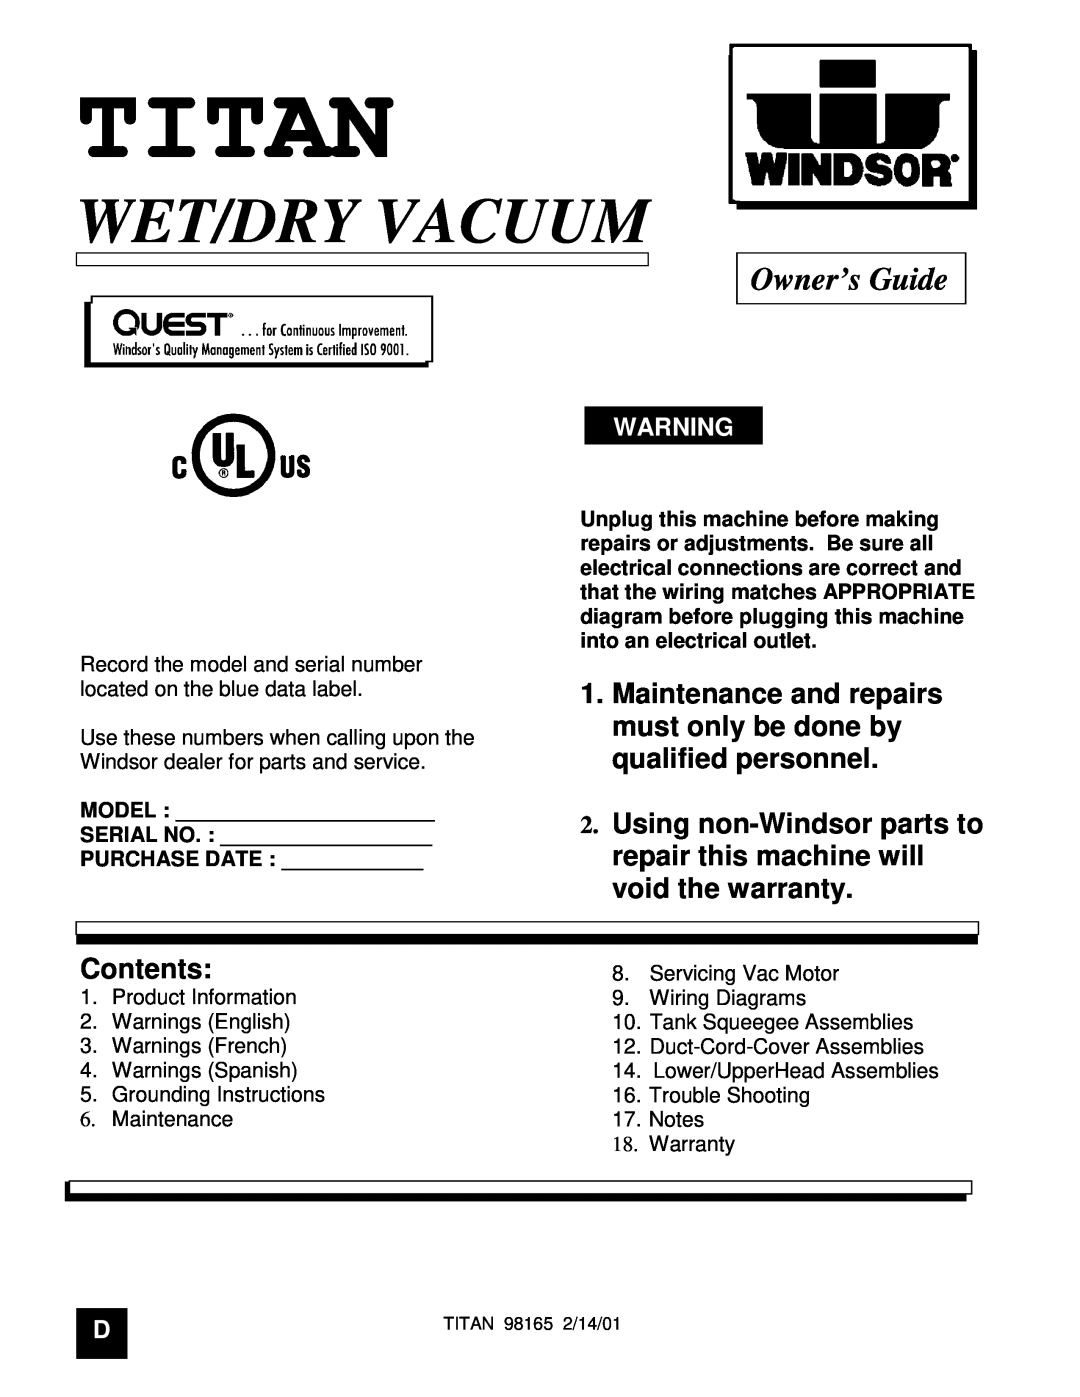 Windsor 98165 warranty Titan, Wet/Dry Vacuum, Owner’s Guide 